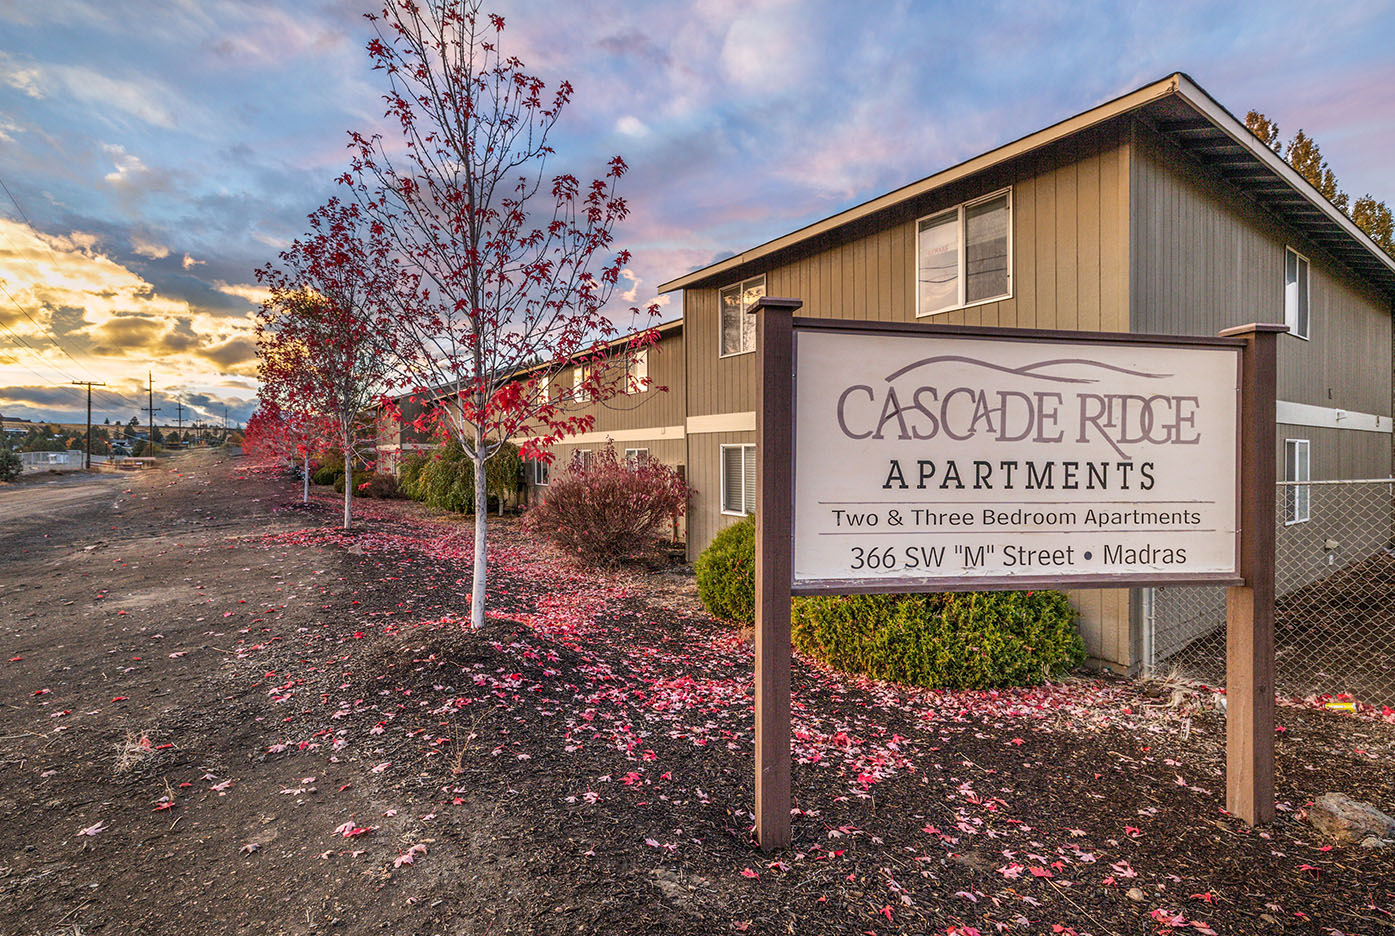 Cascade Ridge Apartments